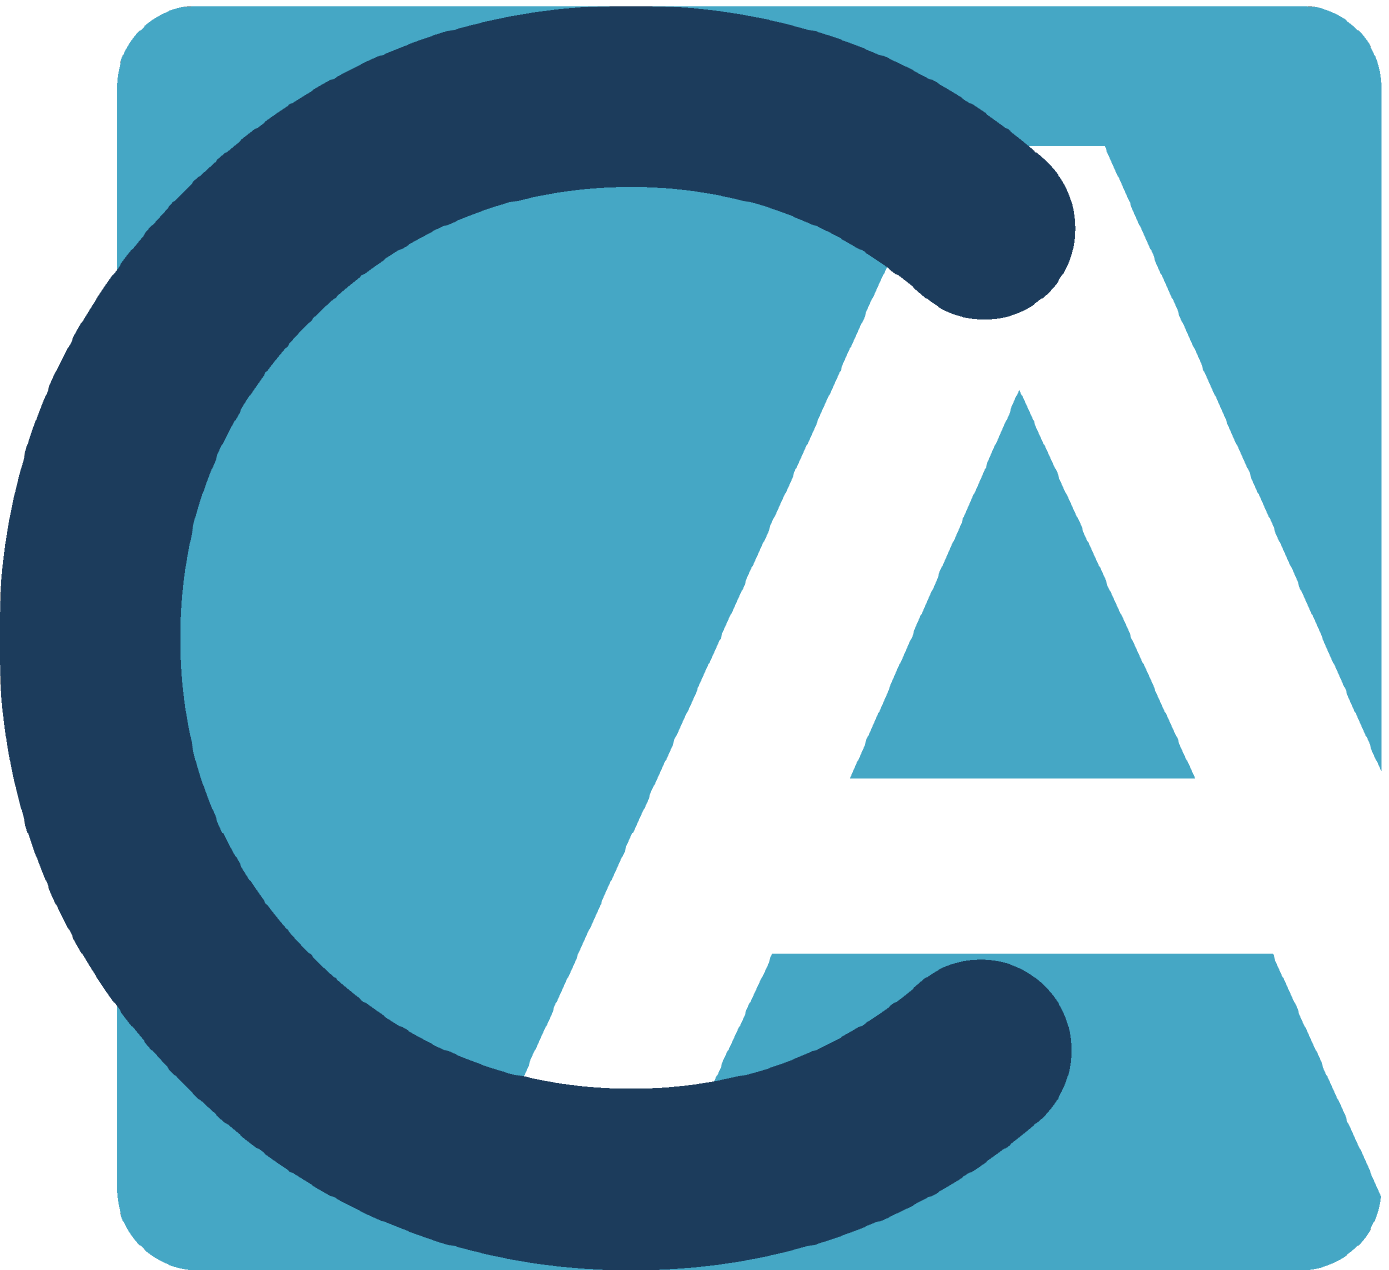 Coder Academy Logo